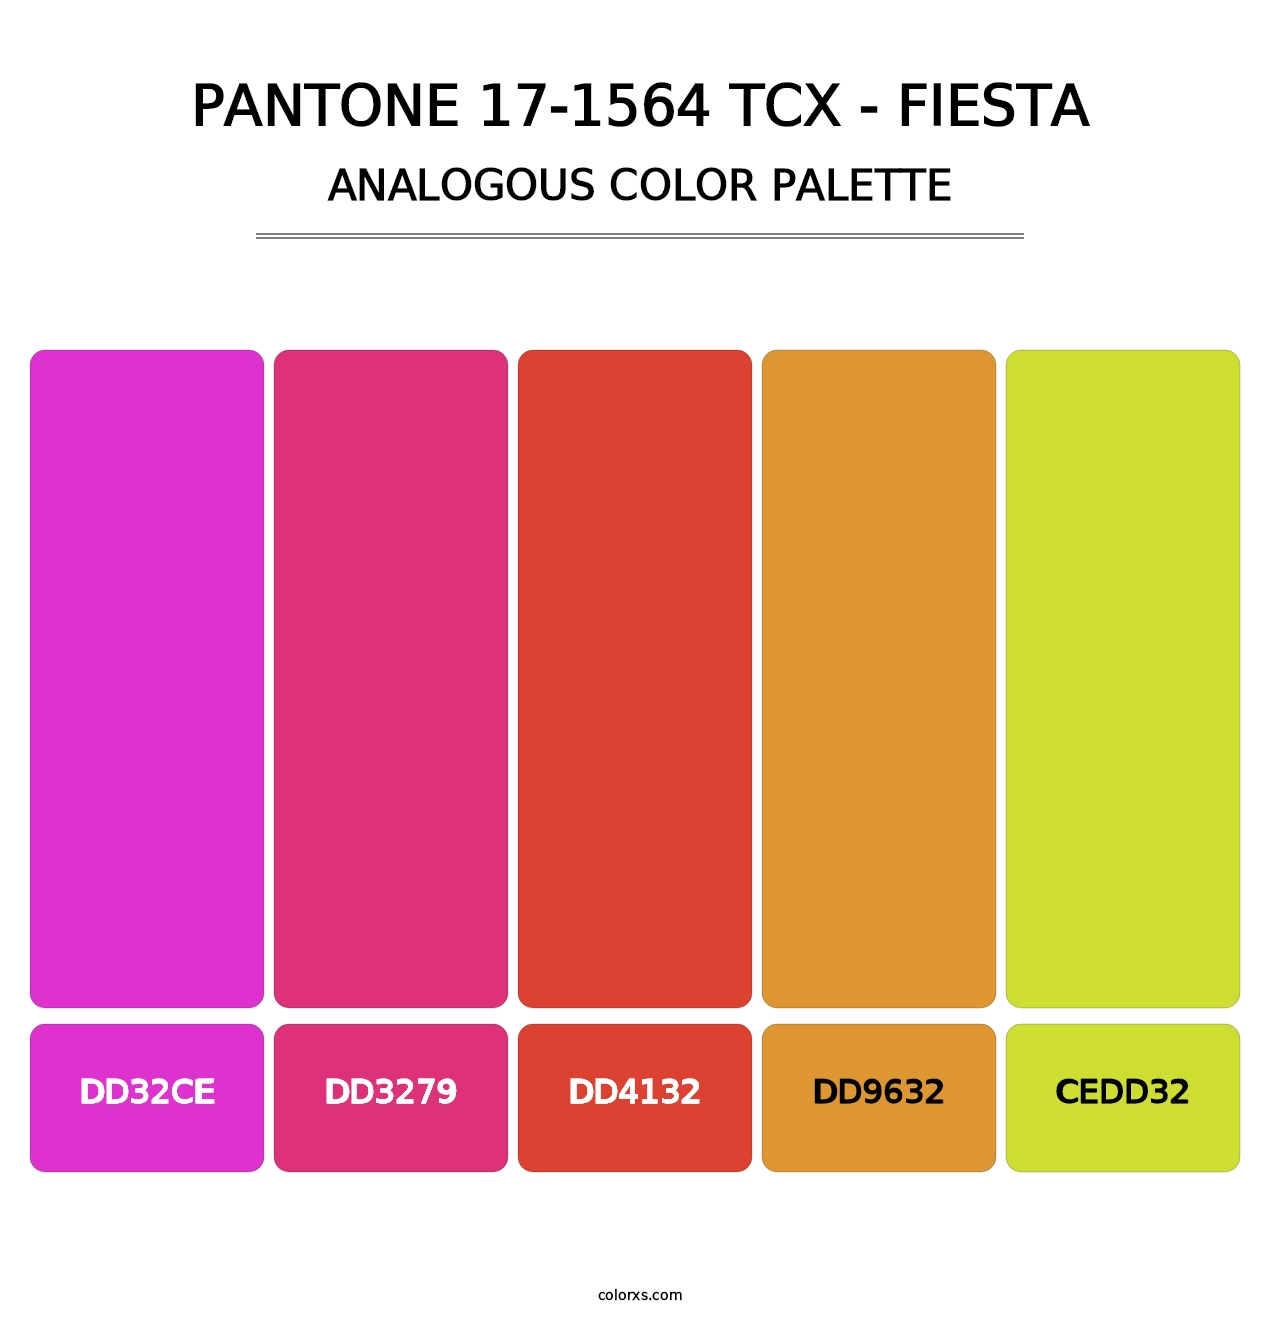 PANTONE 17-1564 TCX - Fiesta - Analogous Color Palette